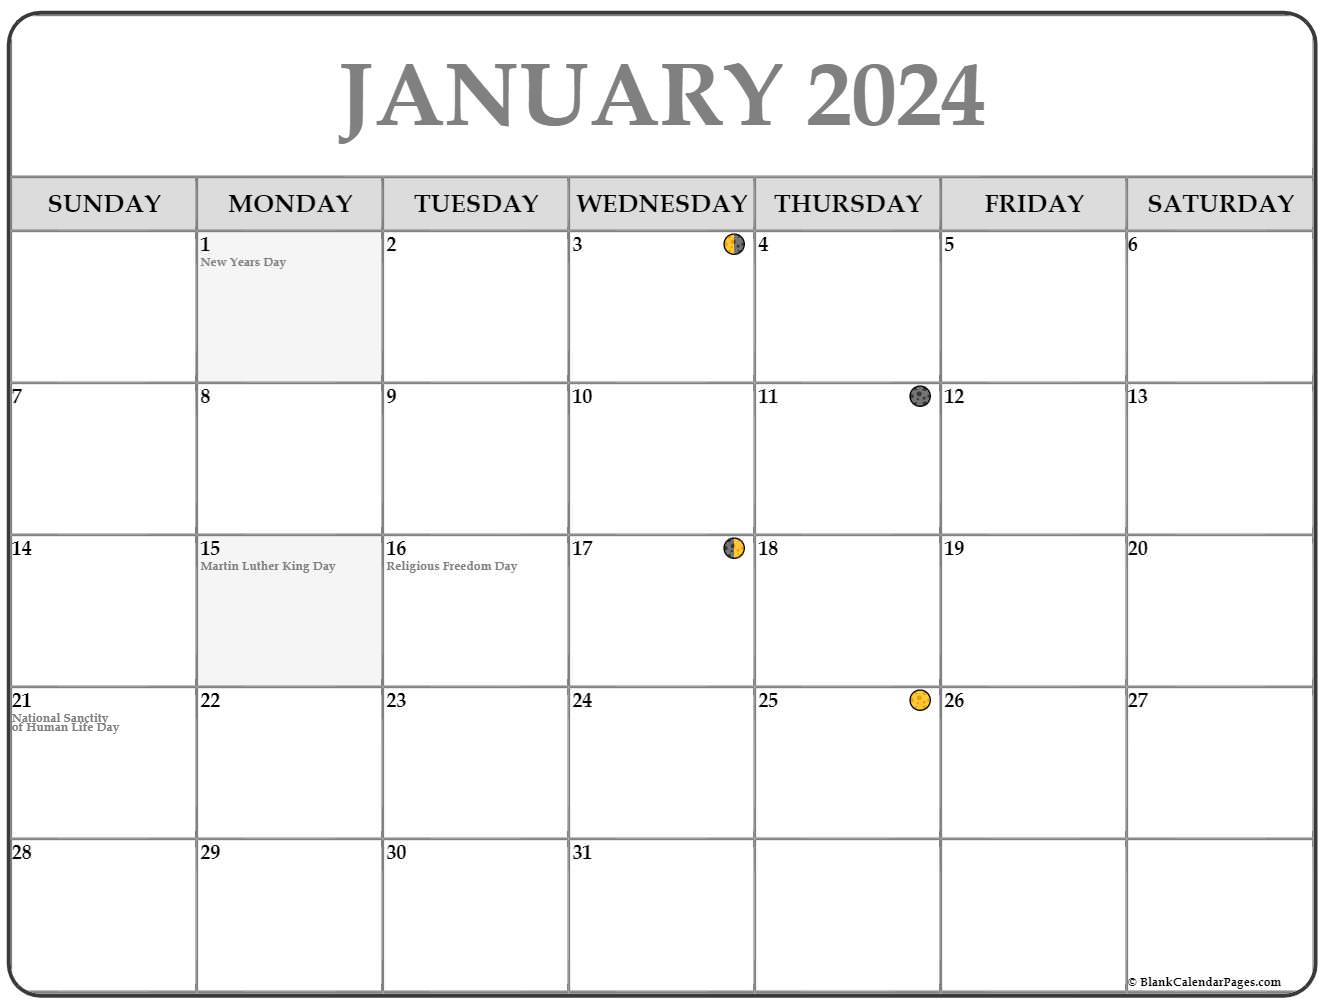 January 2020 calendar | 51+ calendar templates of 2020 calendars